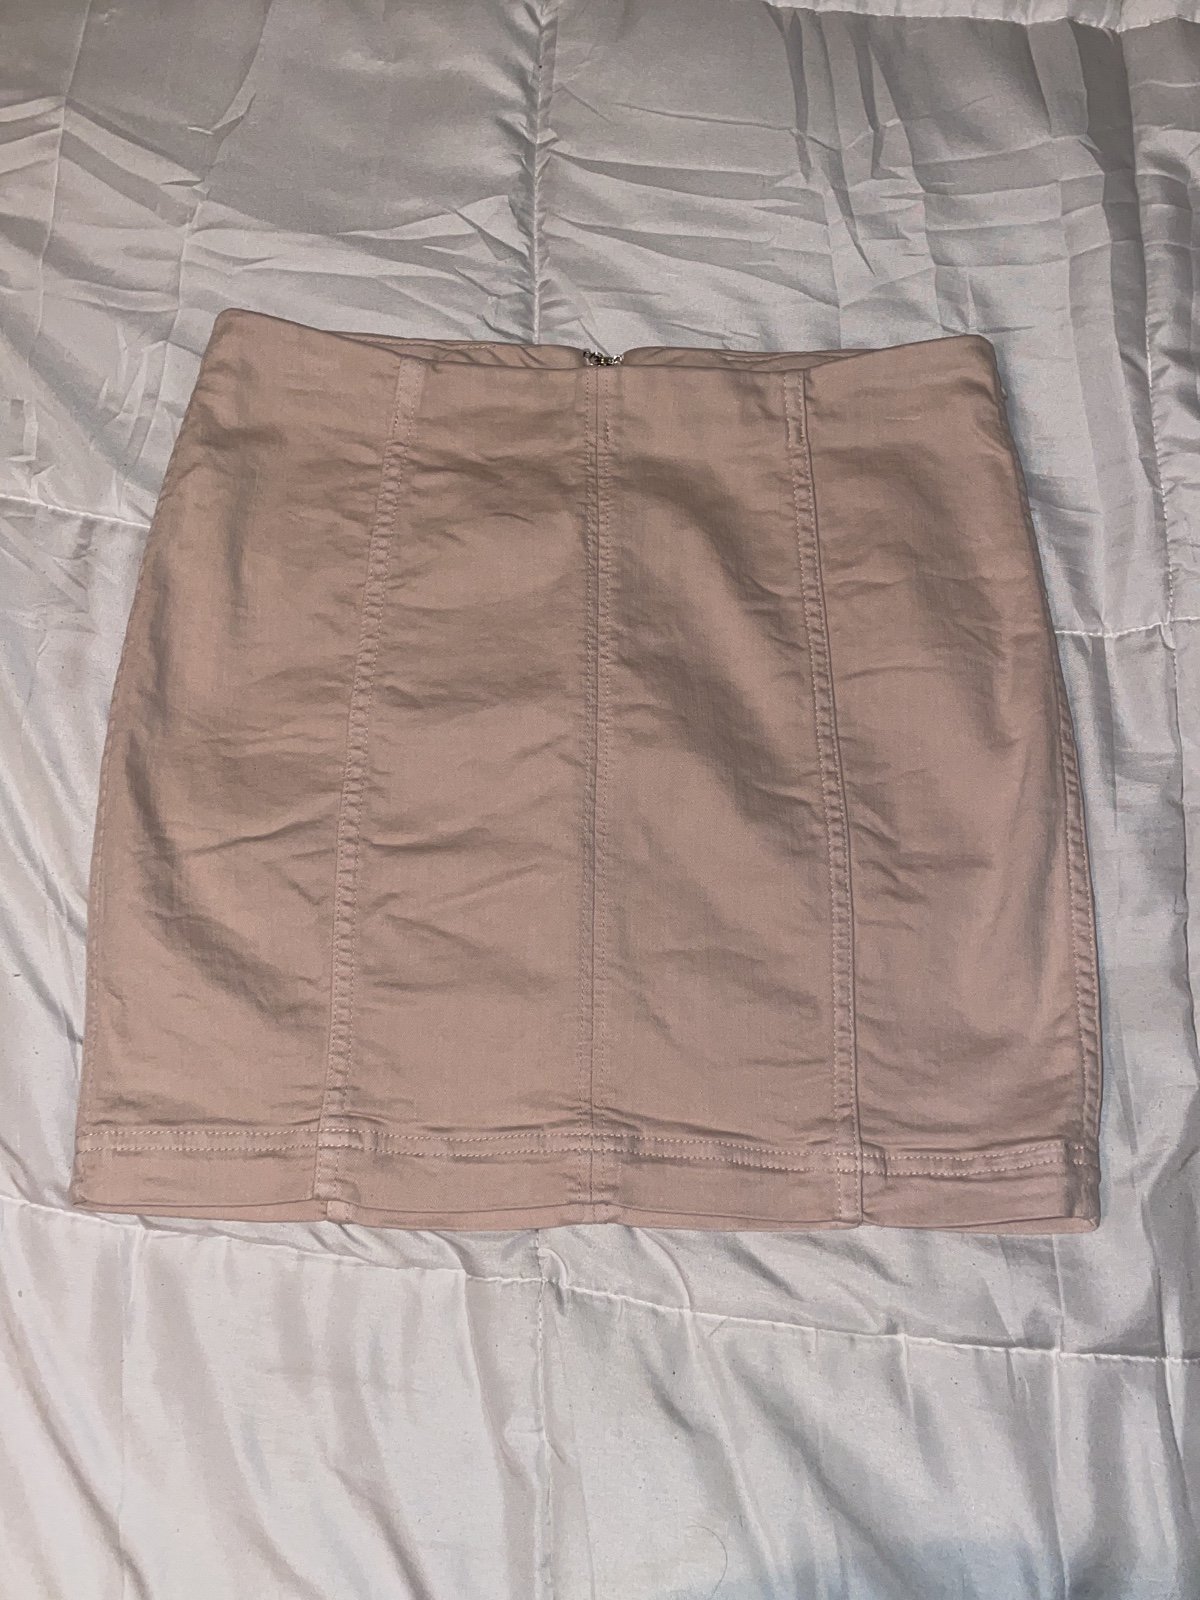 save up to 70% Khaki Free People mini Skirt 4 LLWcosGF9 Discount